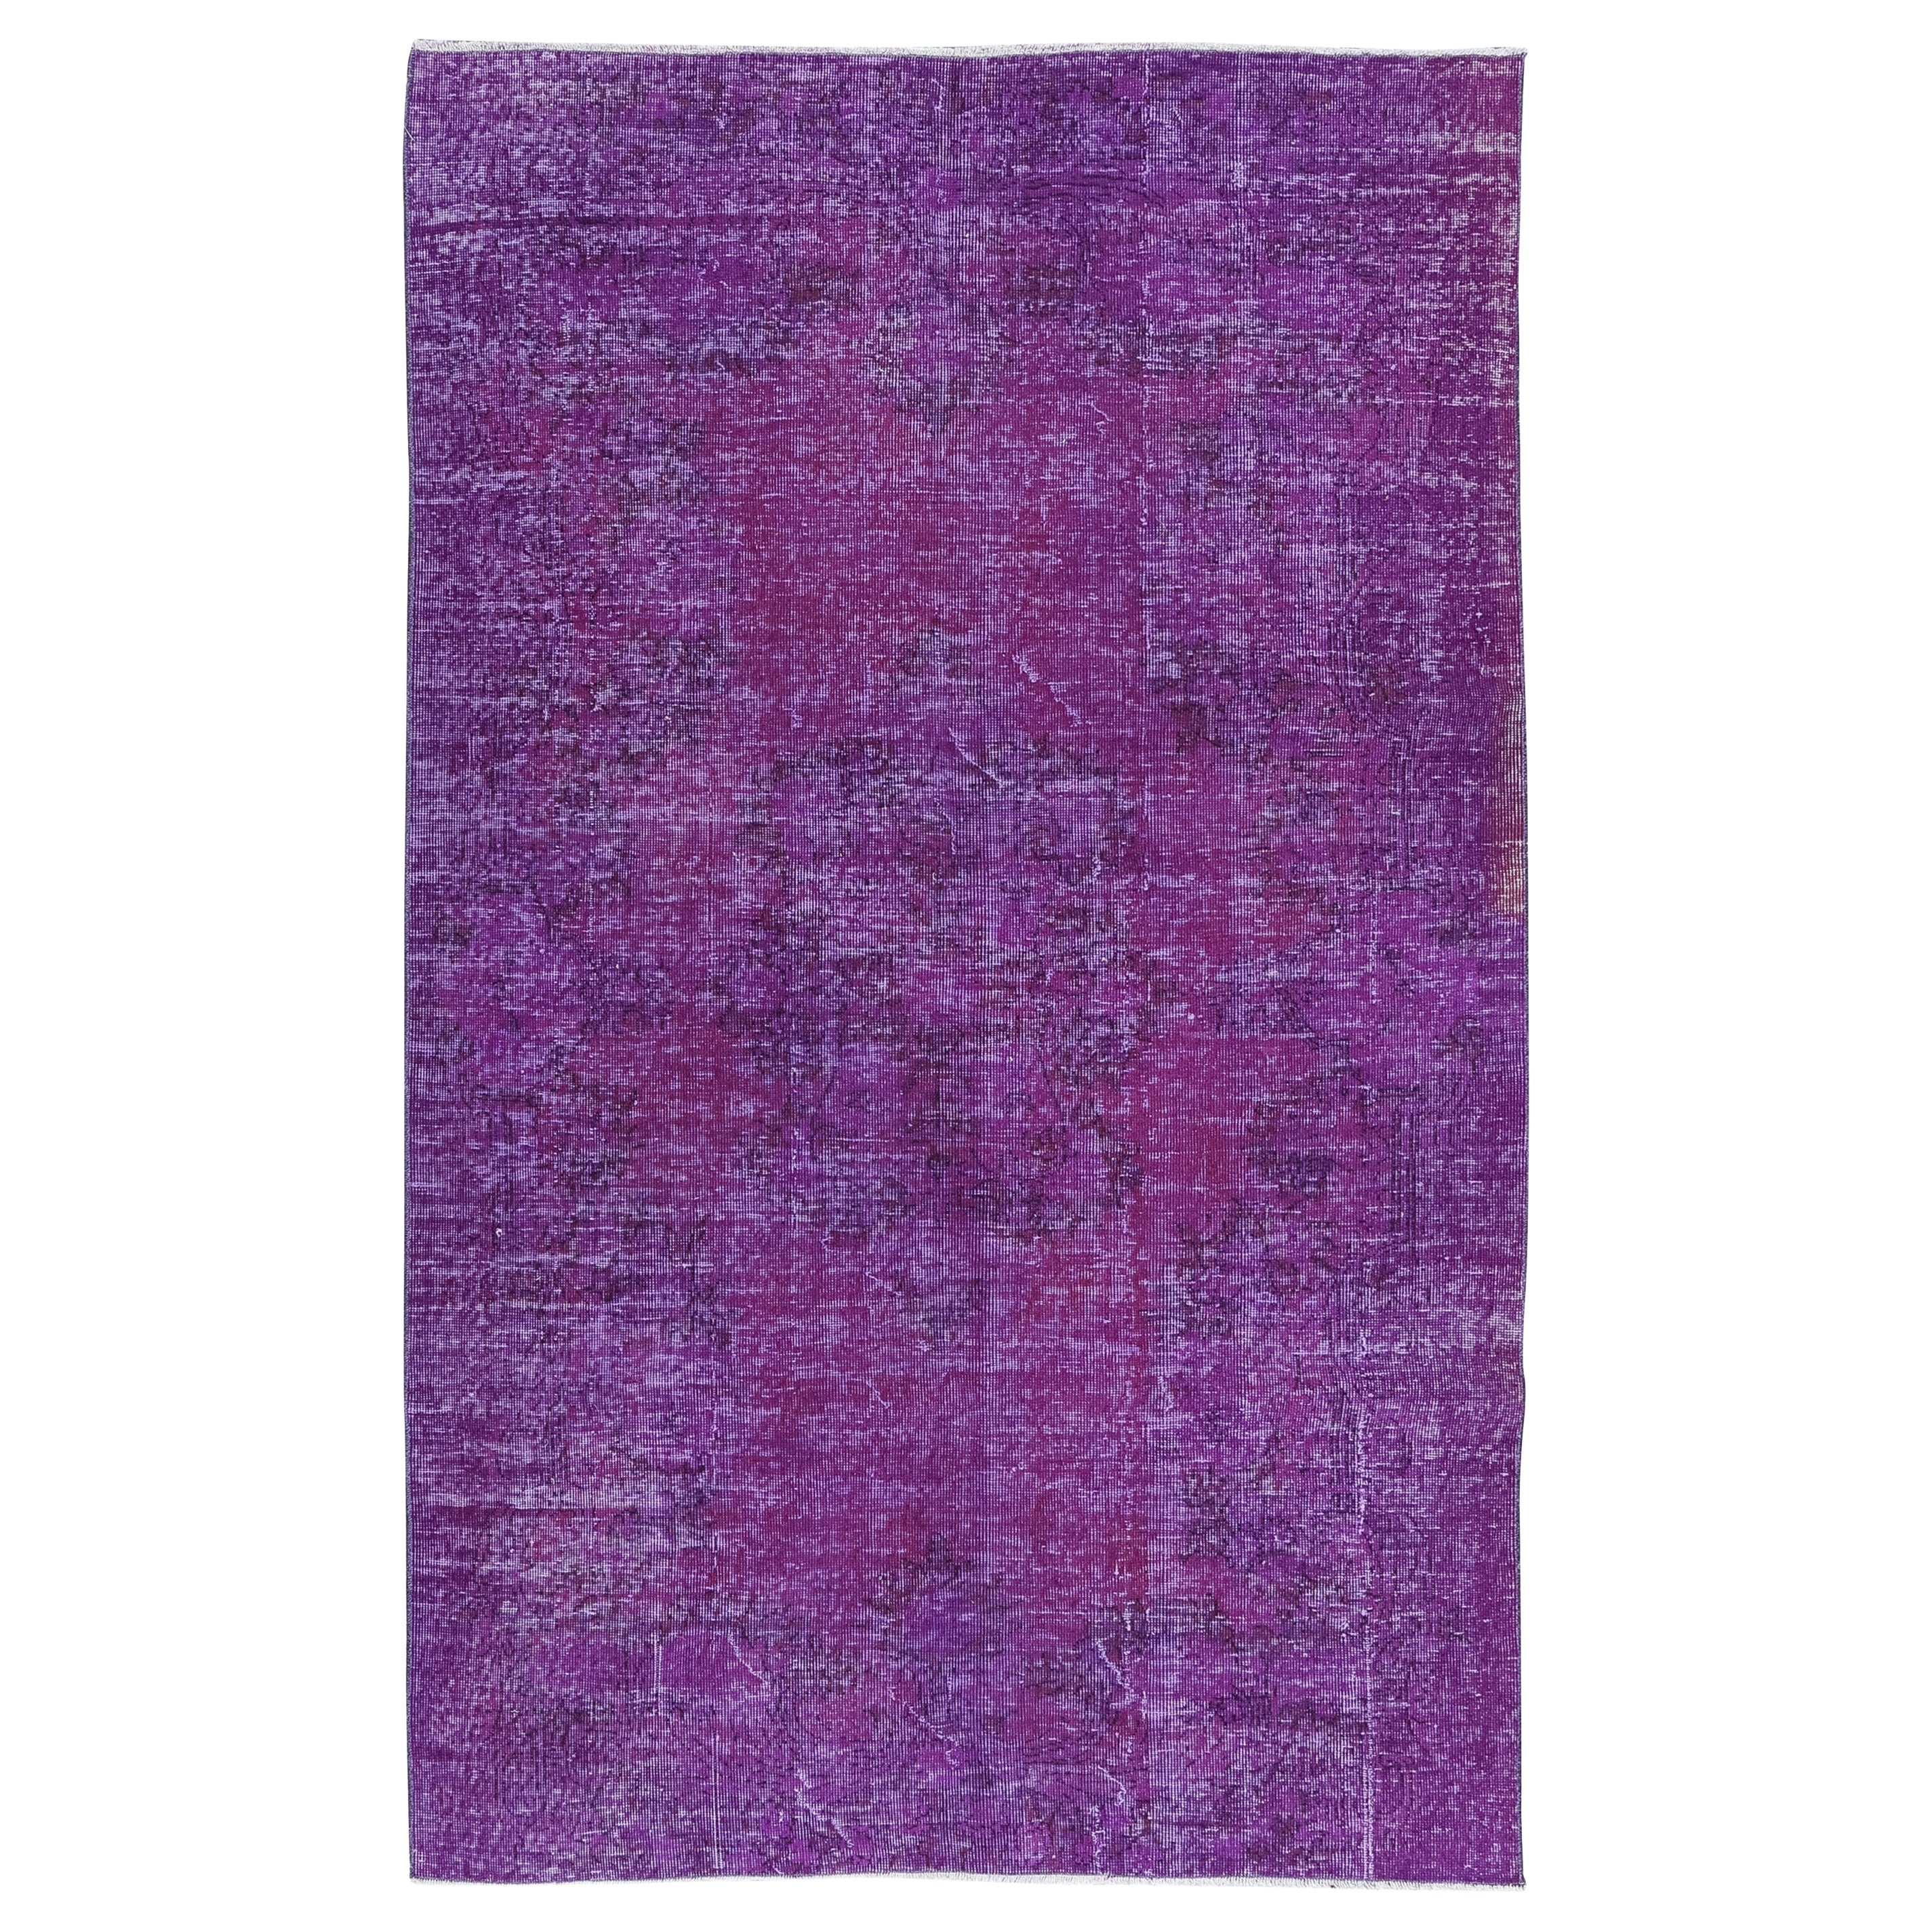 5x8 Ft One-of-a-kind Hand-Made Bohem Purple Floor Rug from Isparta / Turkey